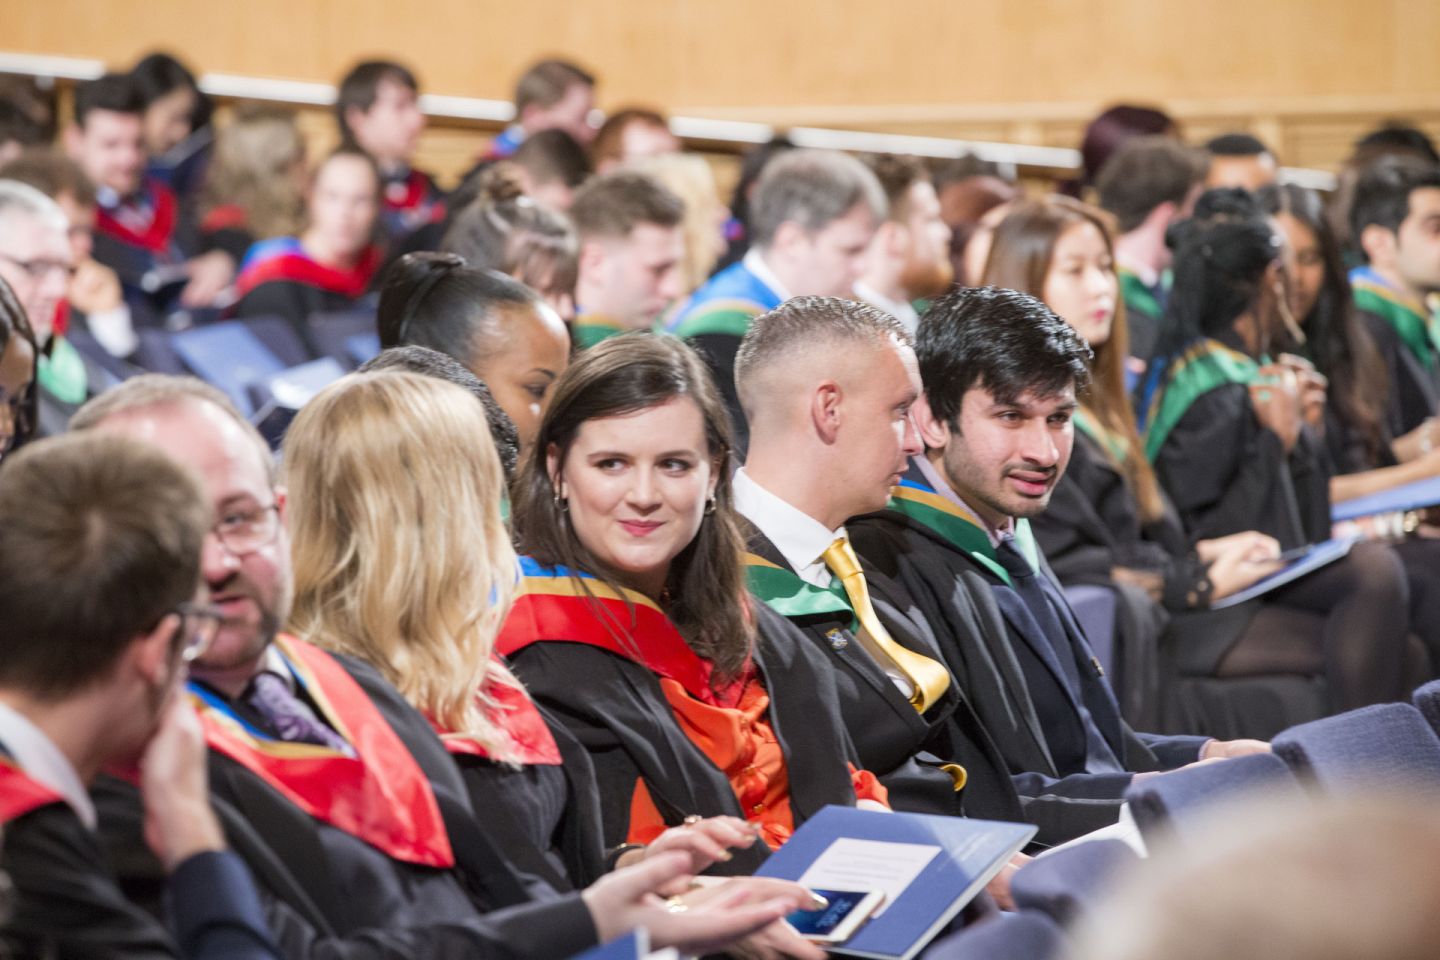 Students on graduation day at Glasgow Caledonian University.